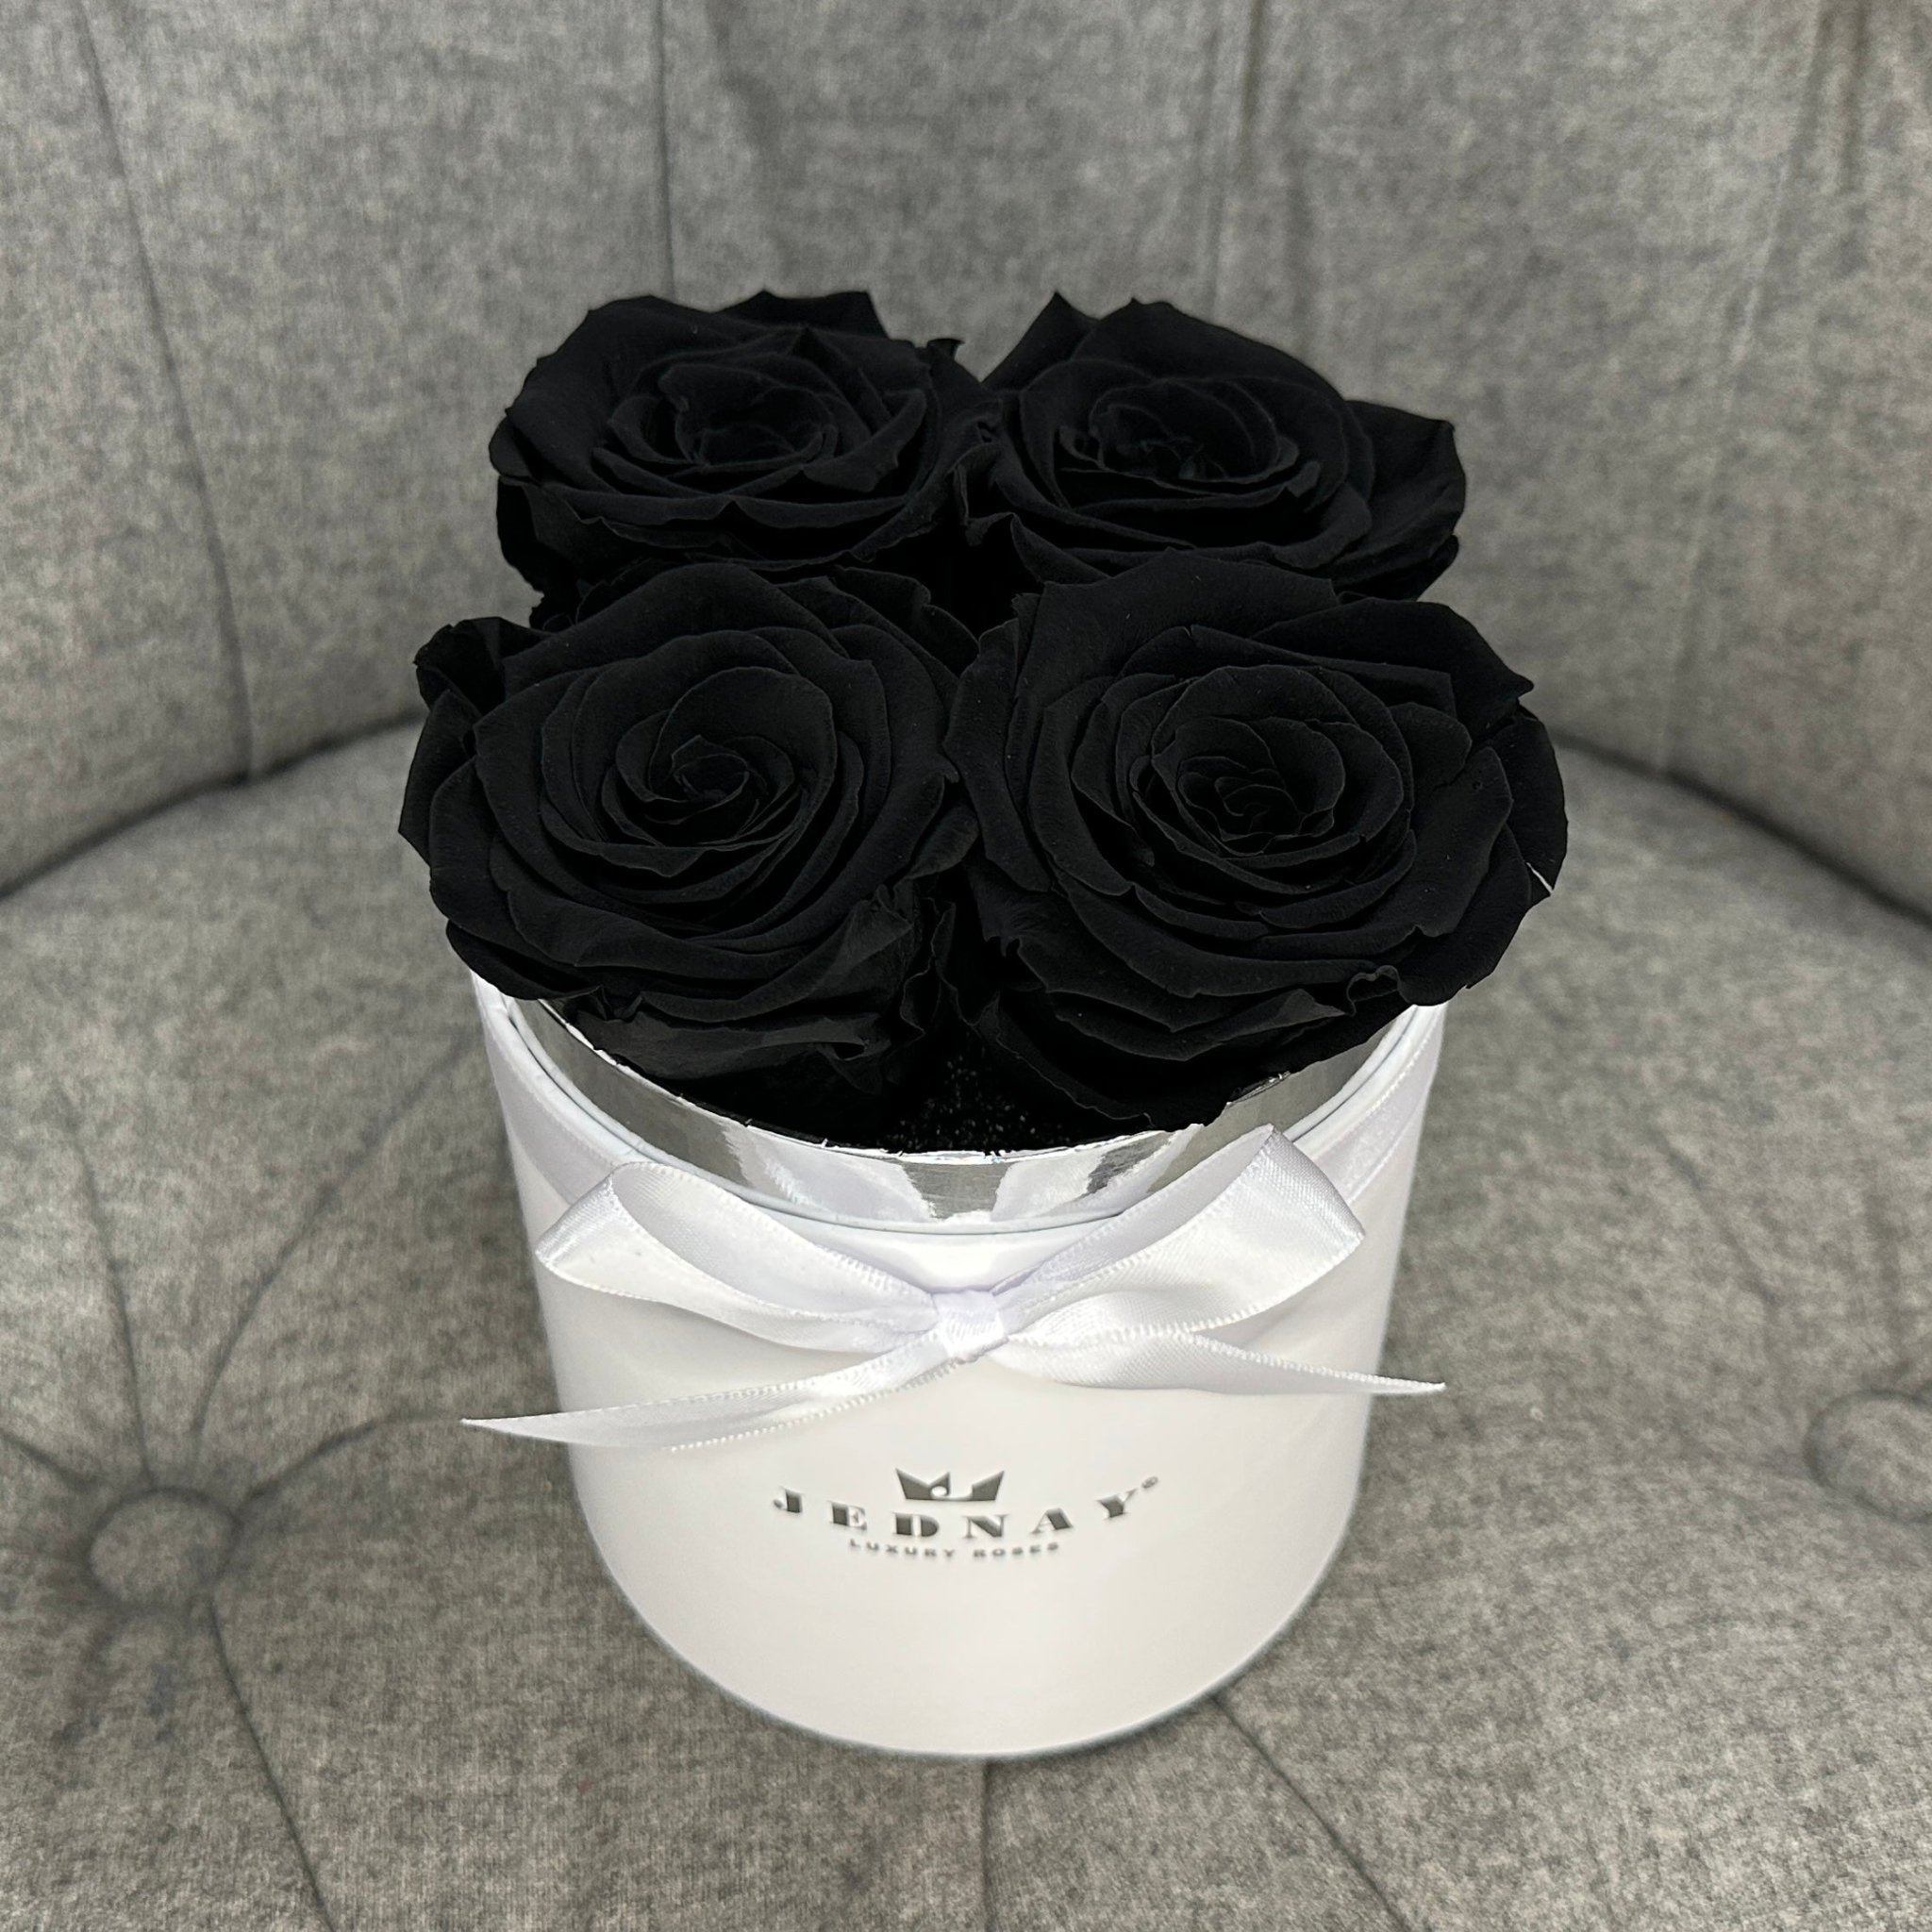 Petite Classic White Forever Rose Box - Midnight Black Eternal Roses - Jednay Roses